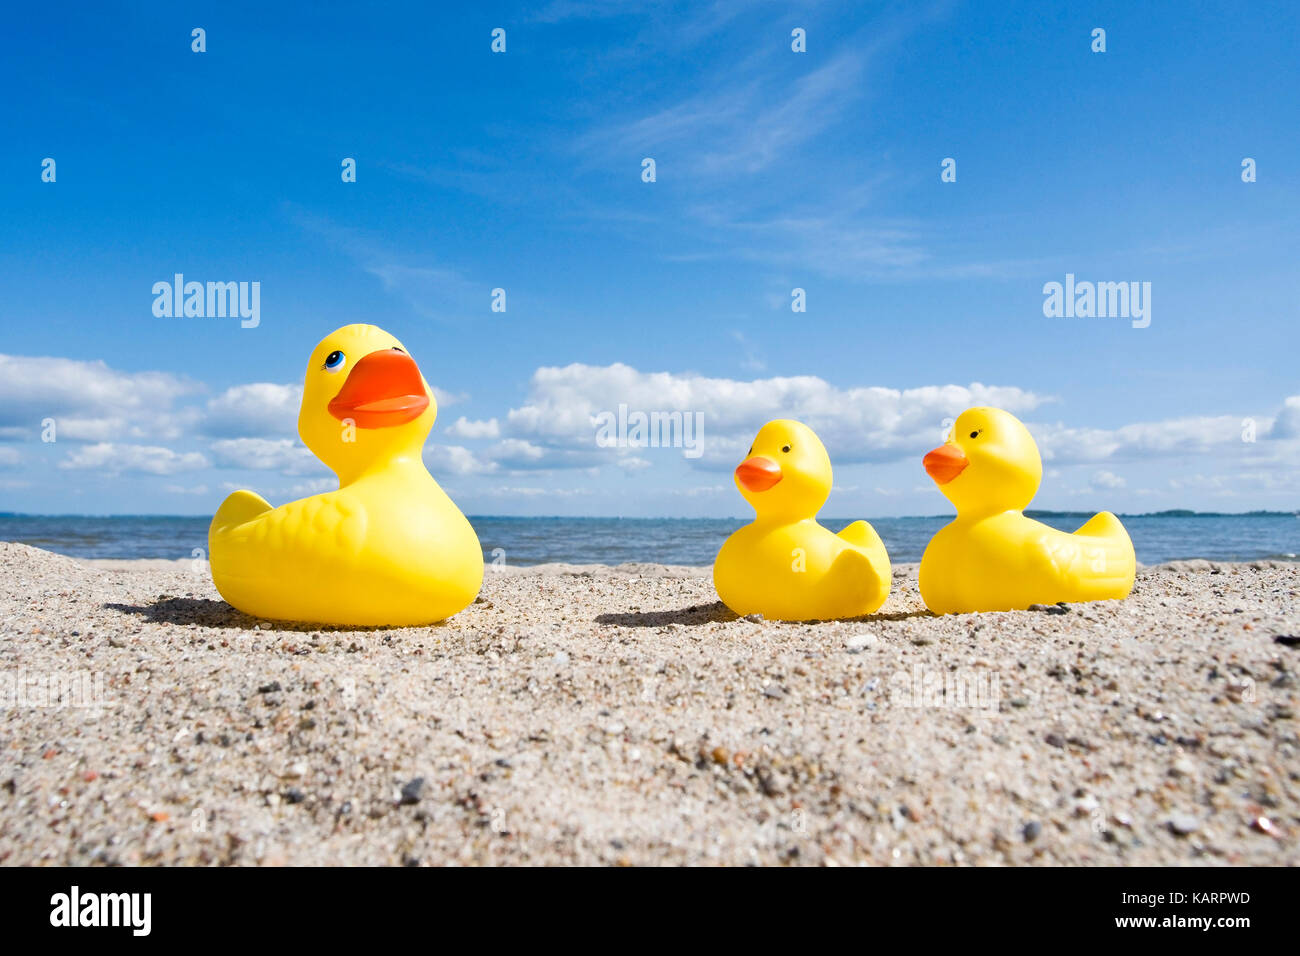 Baltic coast, elastic ducks on the beach, Ostseekueste, Gummienten am Strand Stock Photo